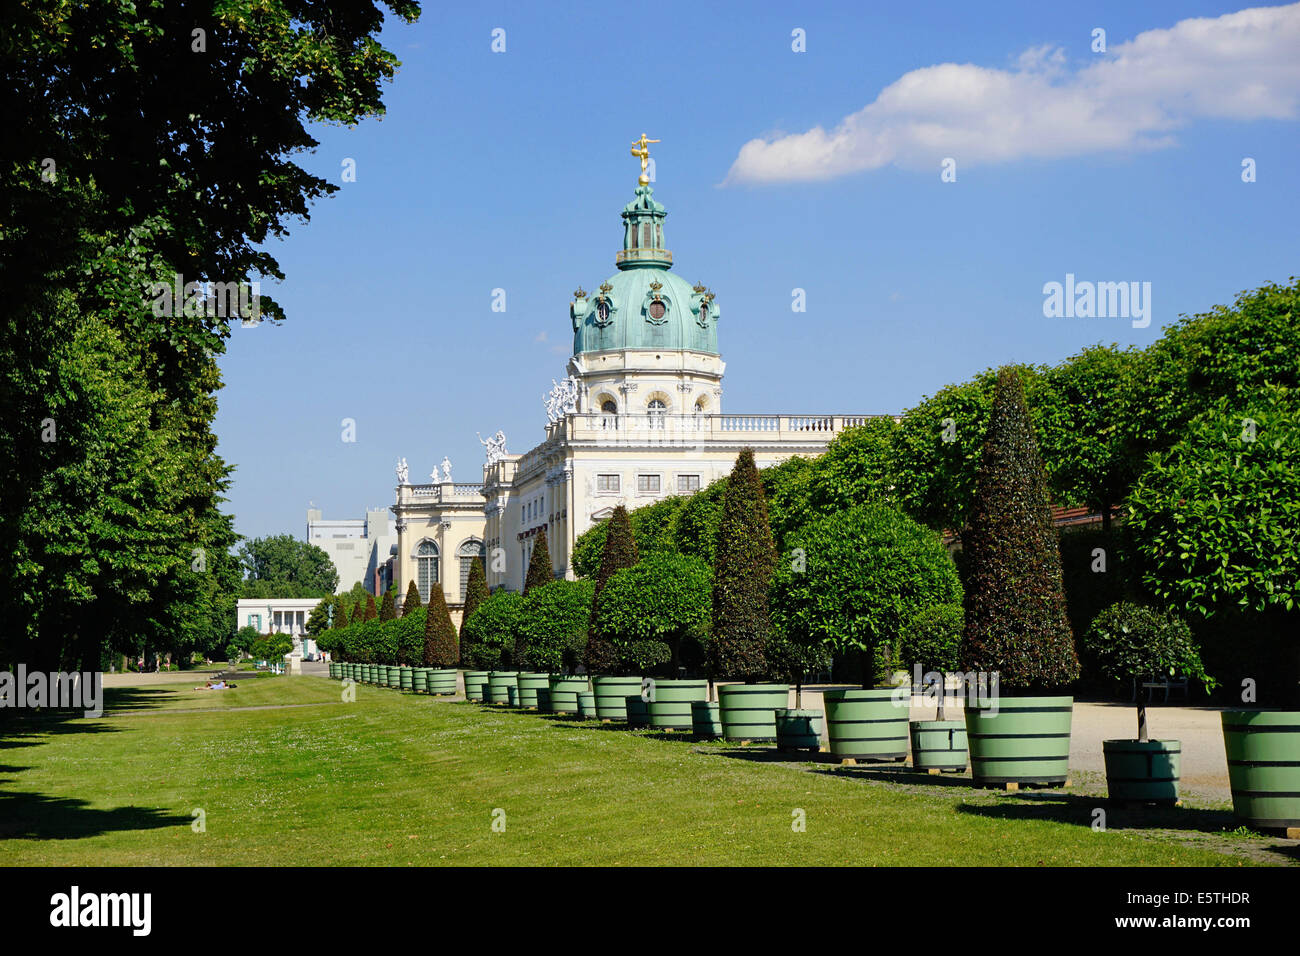 Charlottenburg Palace, Berlin, Germany, Europe Stock Photo